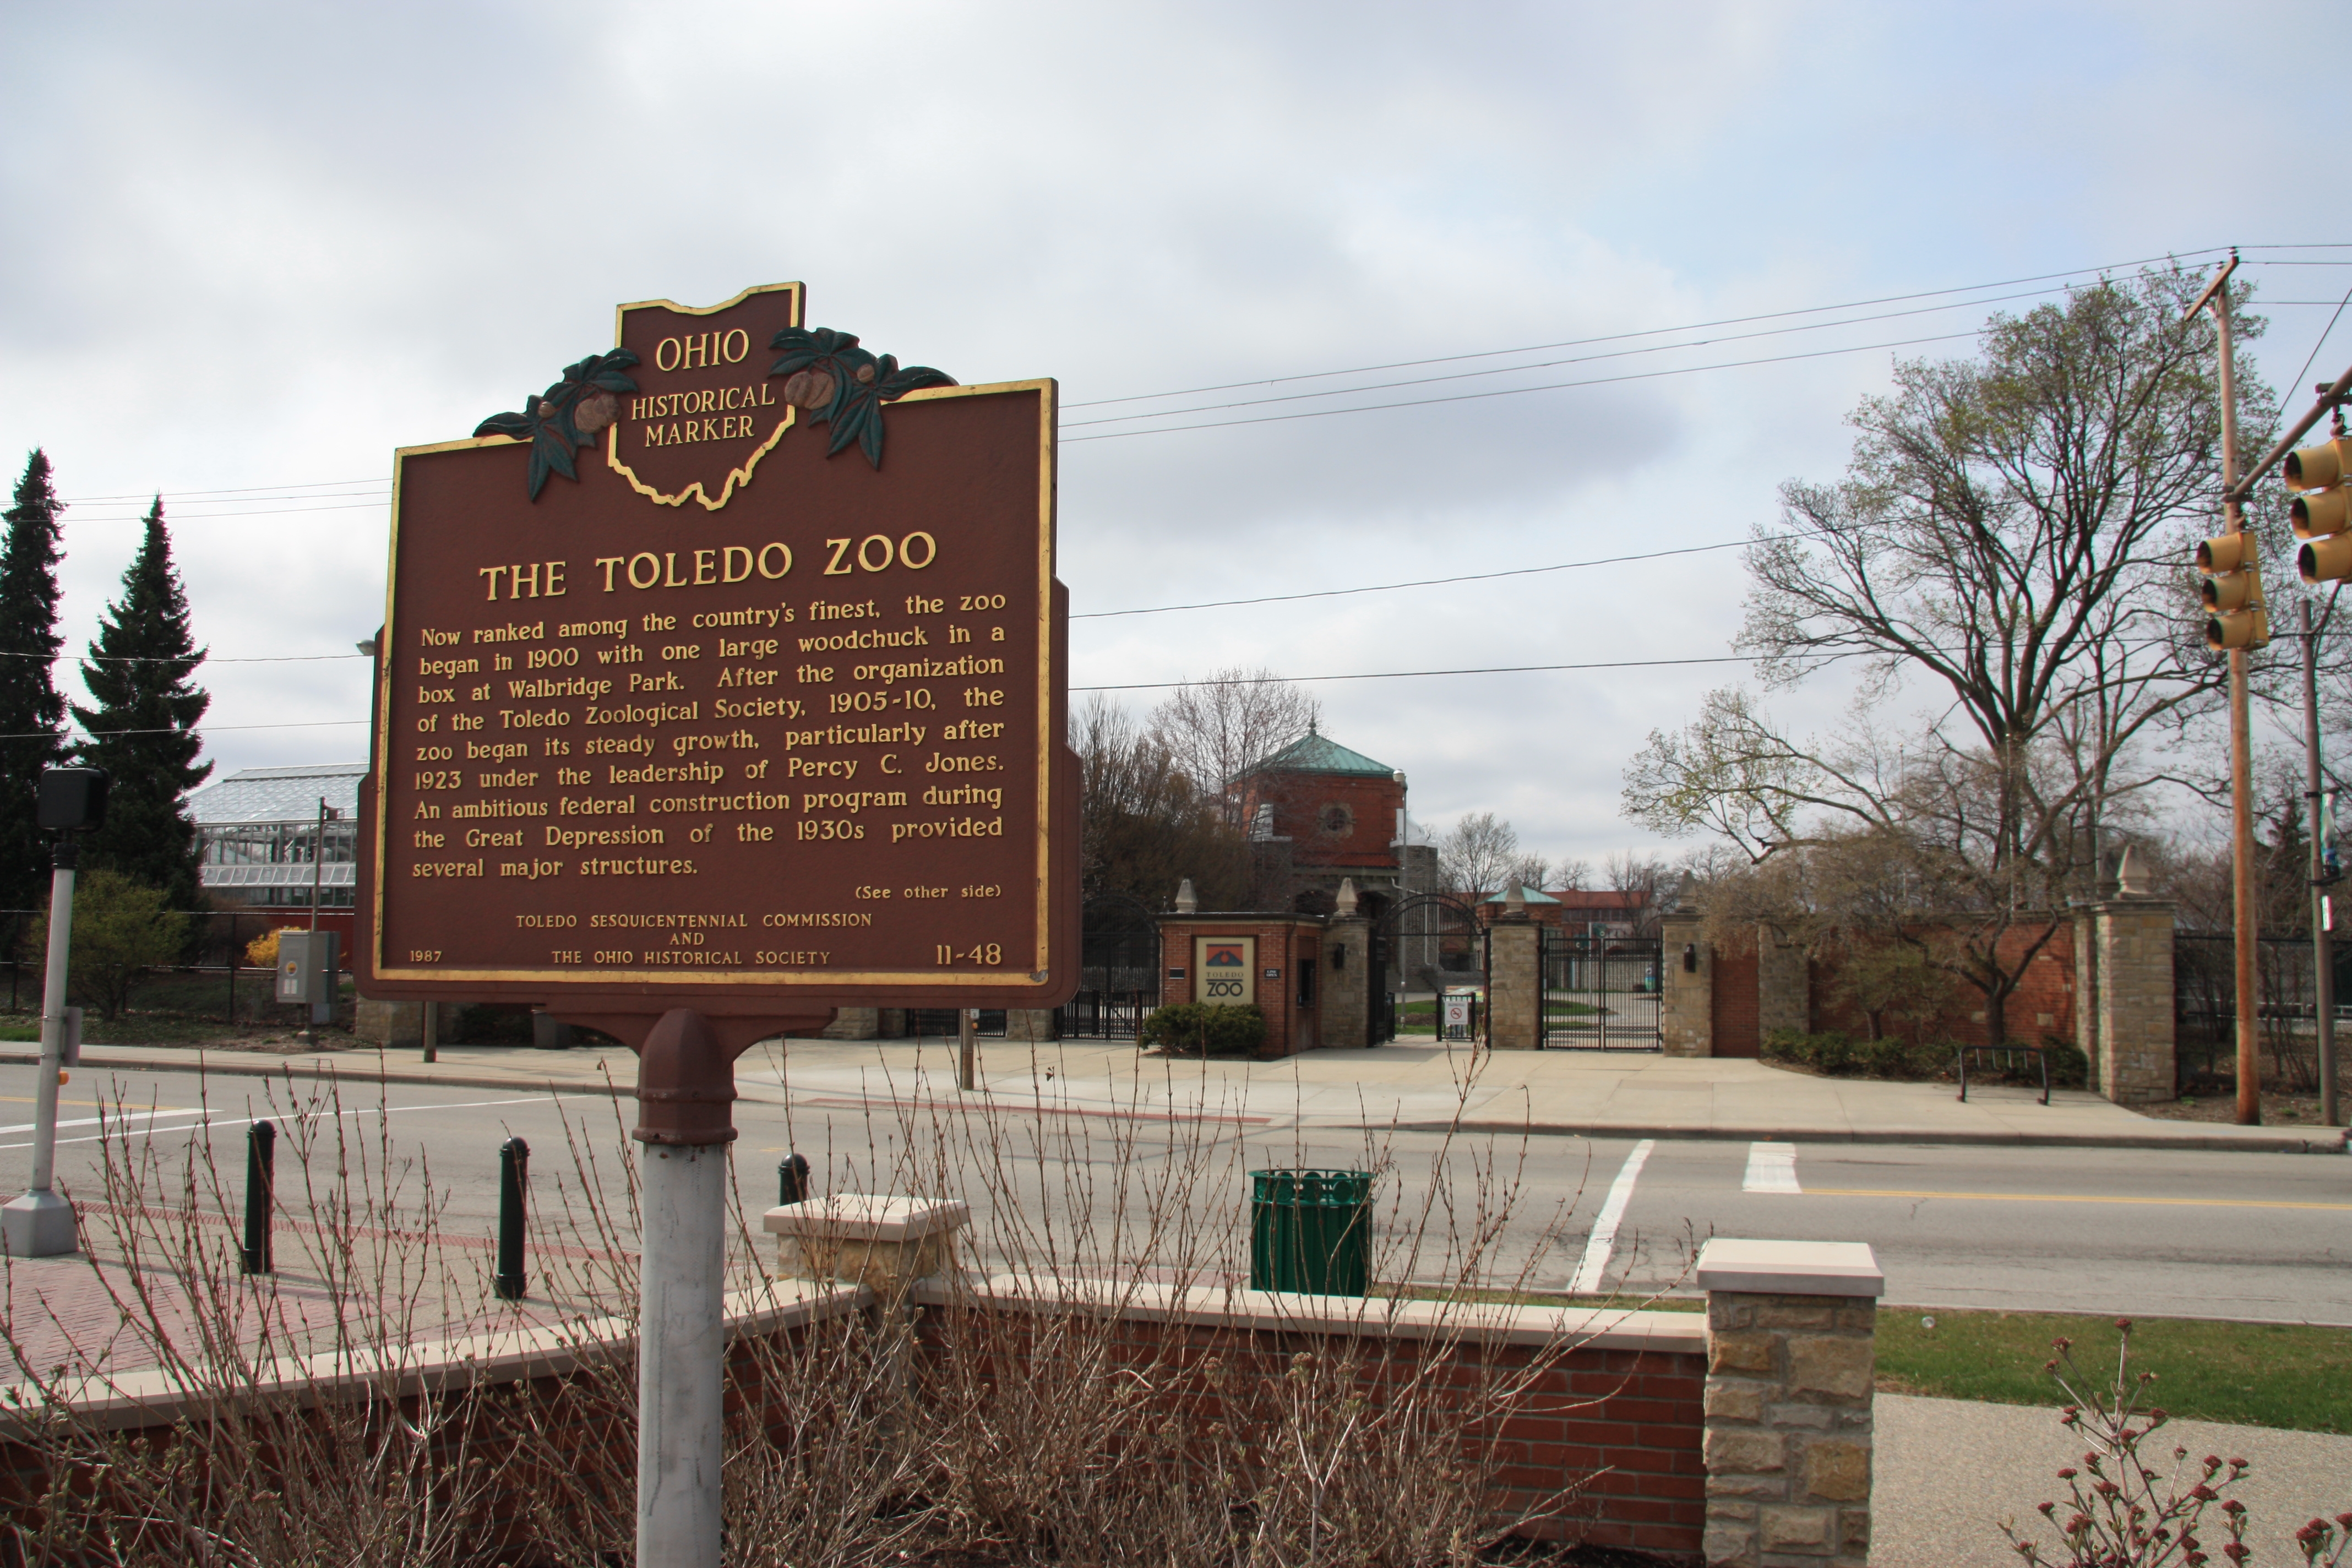 The Toledo Zoo / The New Deal in Toledo Marker